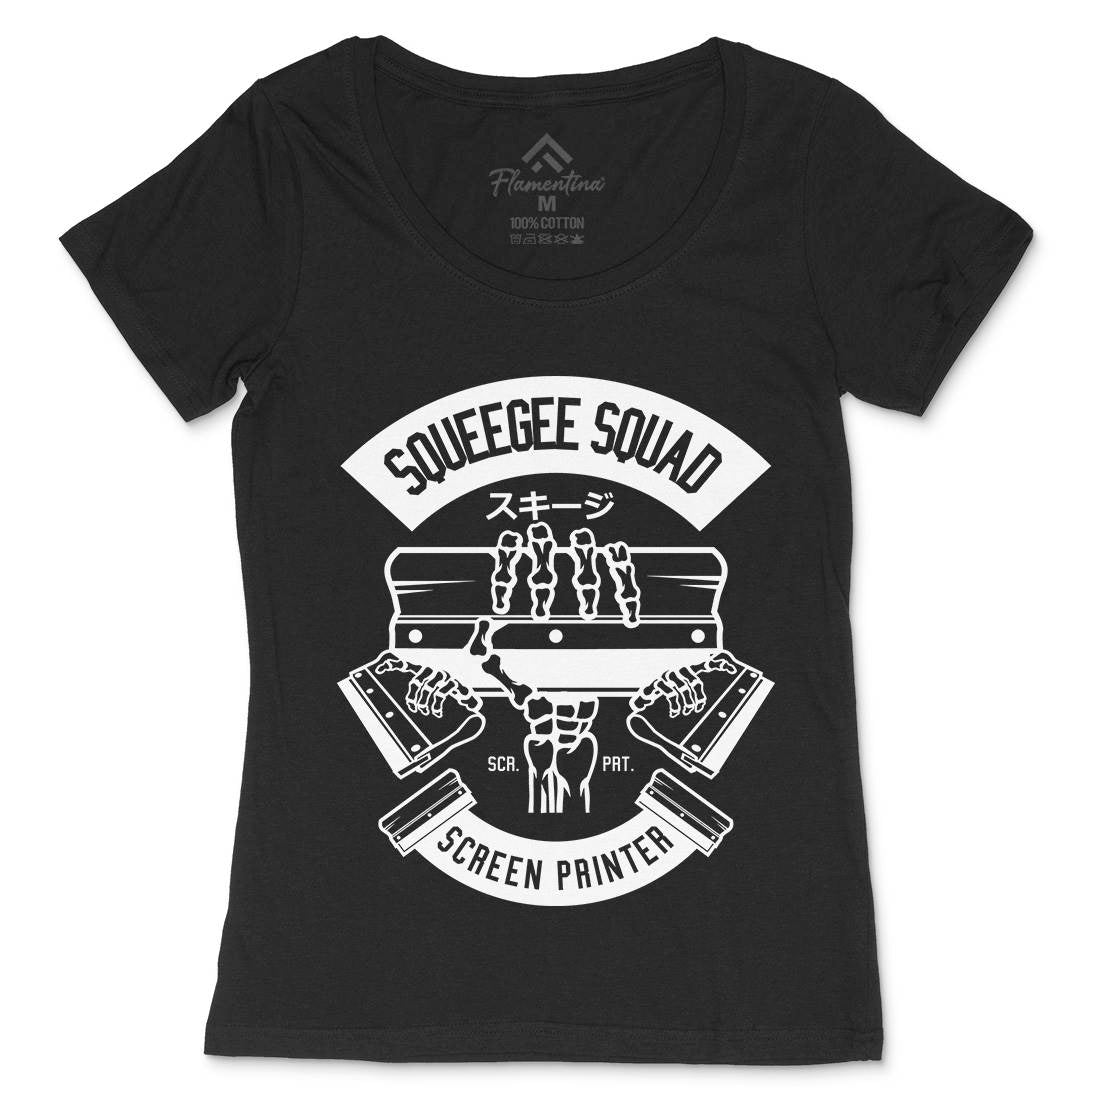 Squeegee Squad Womens Scoop Neck T-Shirt Retro B642